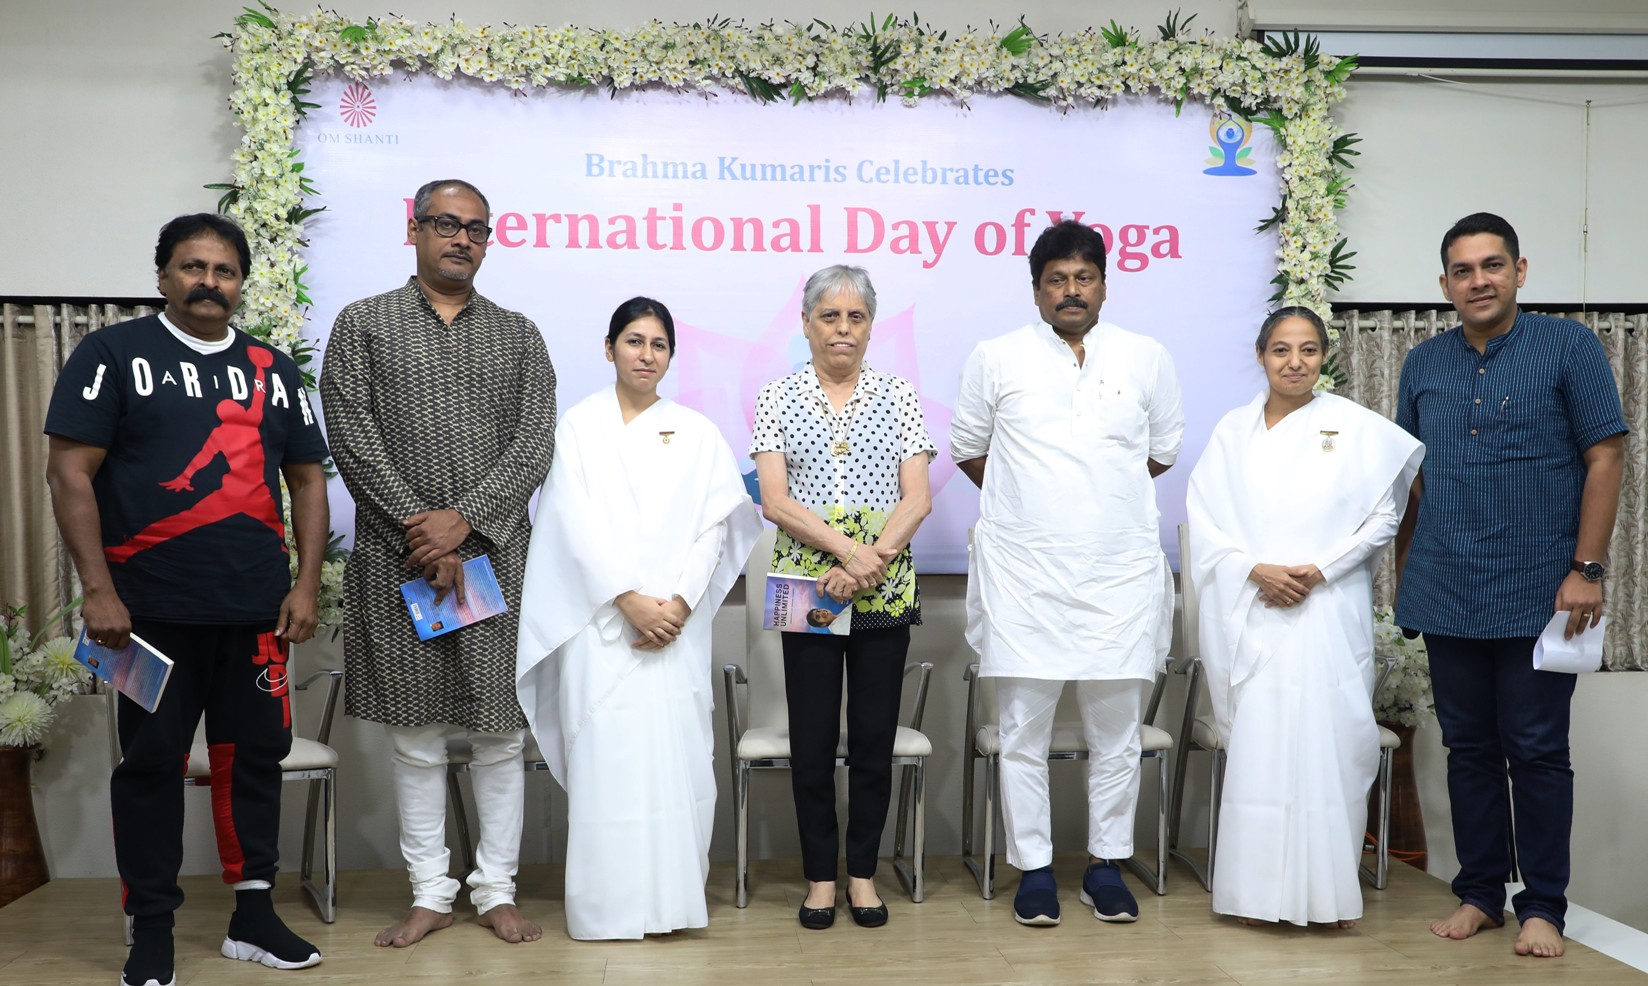 Brahma Kumaris celebrated ‘International Yoga Day’ with martial art expert Chitah Yajnesh Shetty